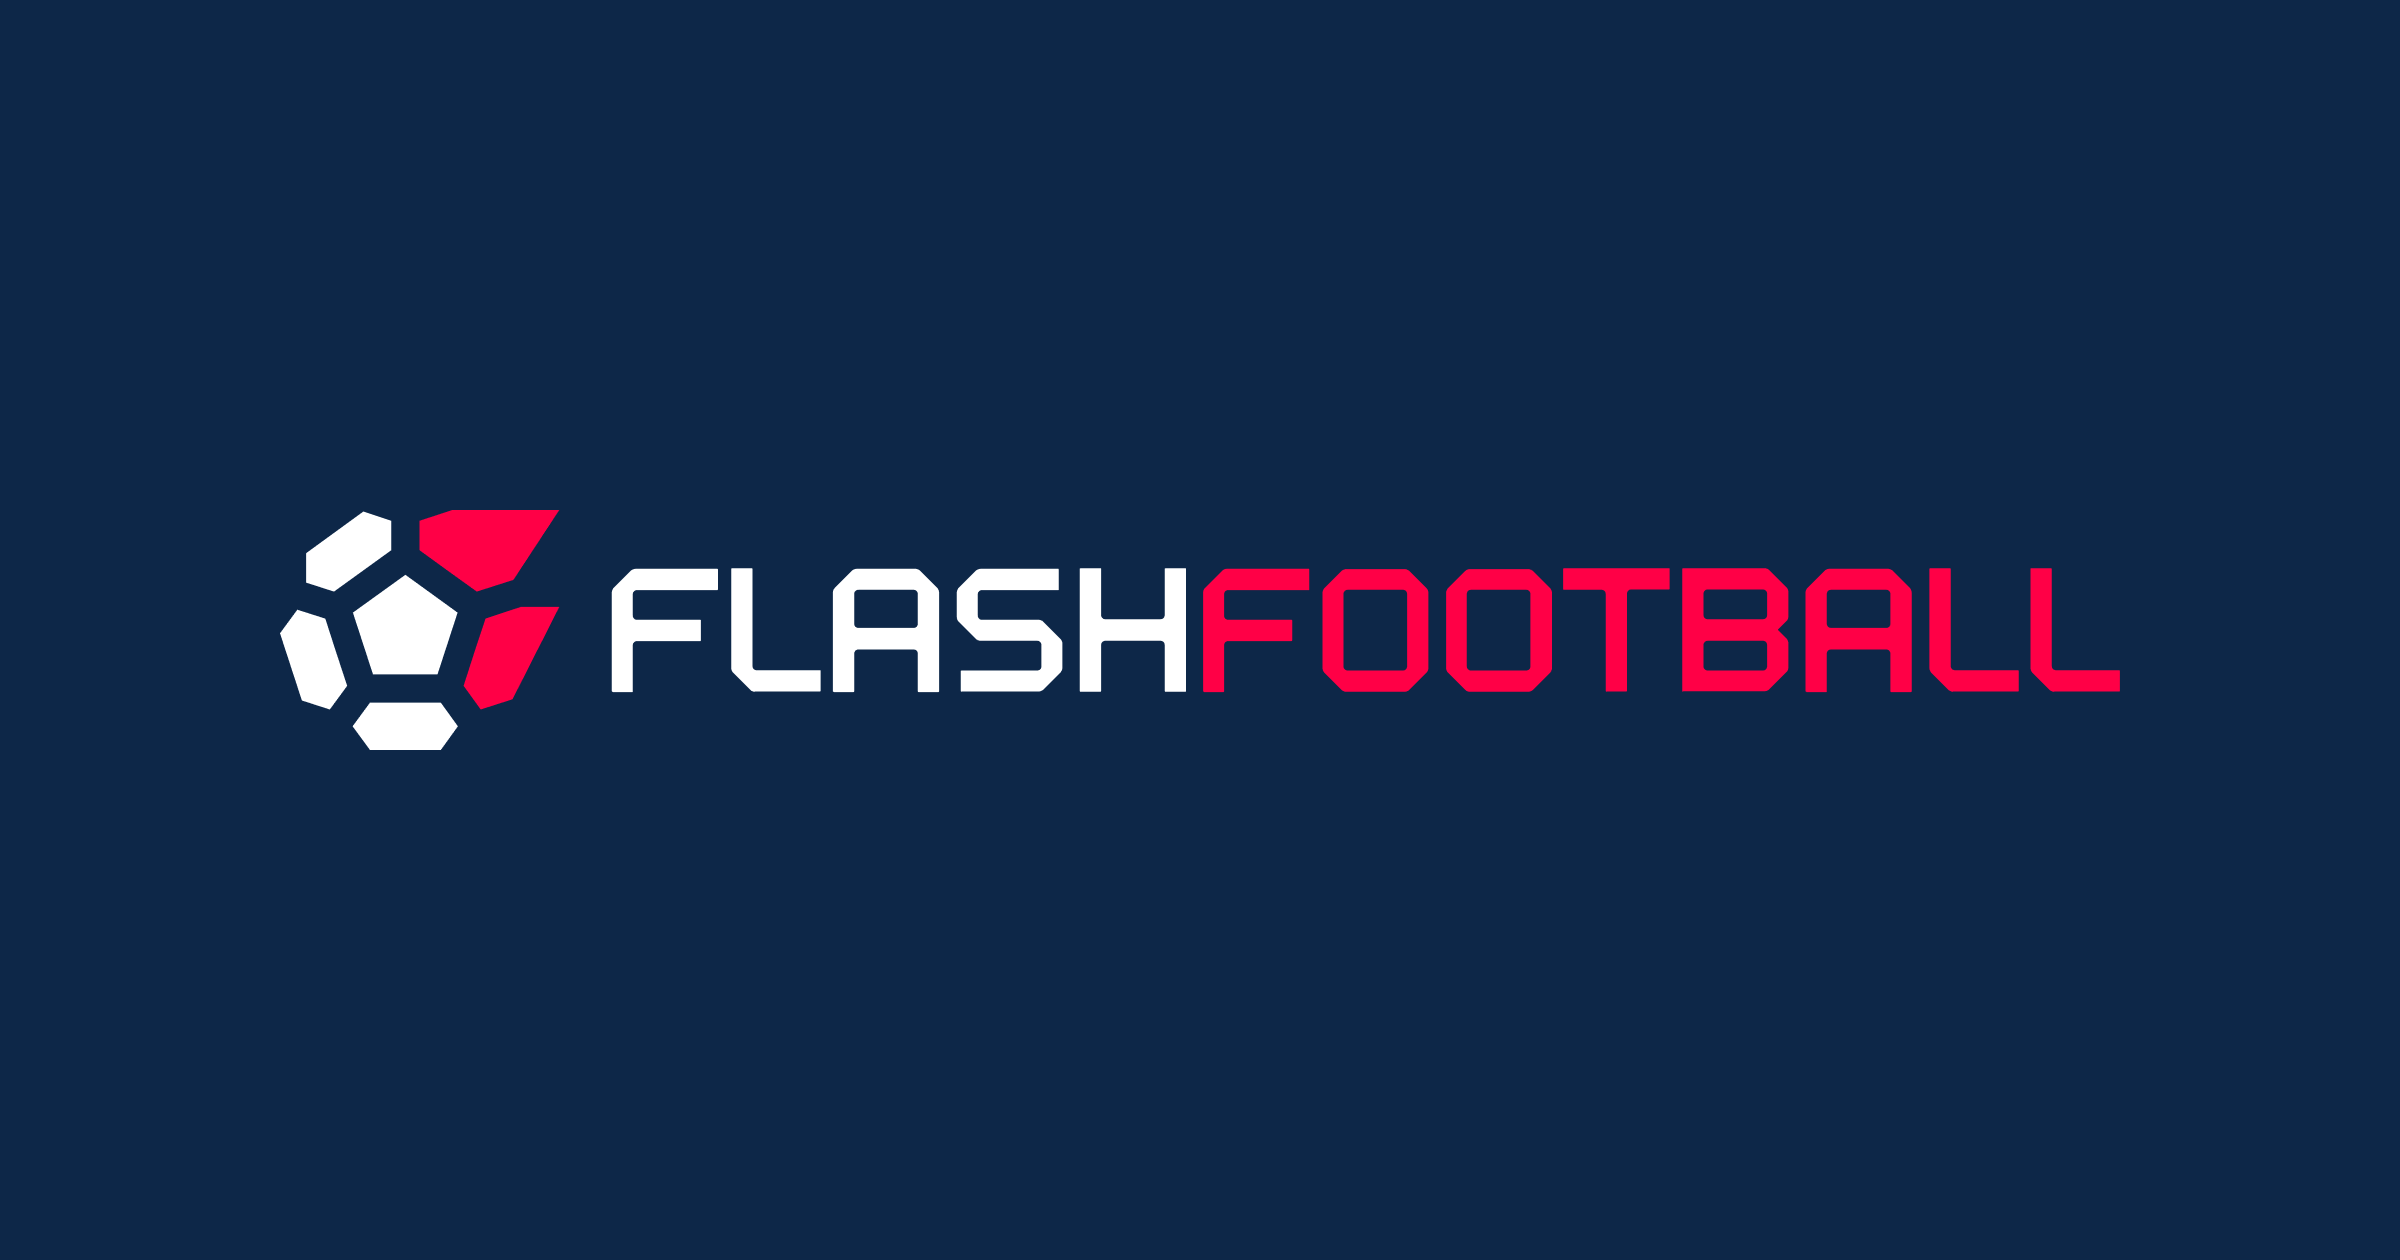 www.flashfootball.com